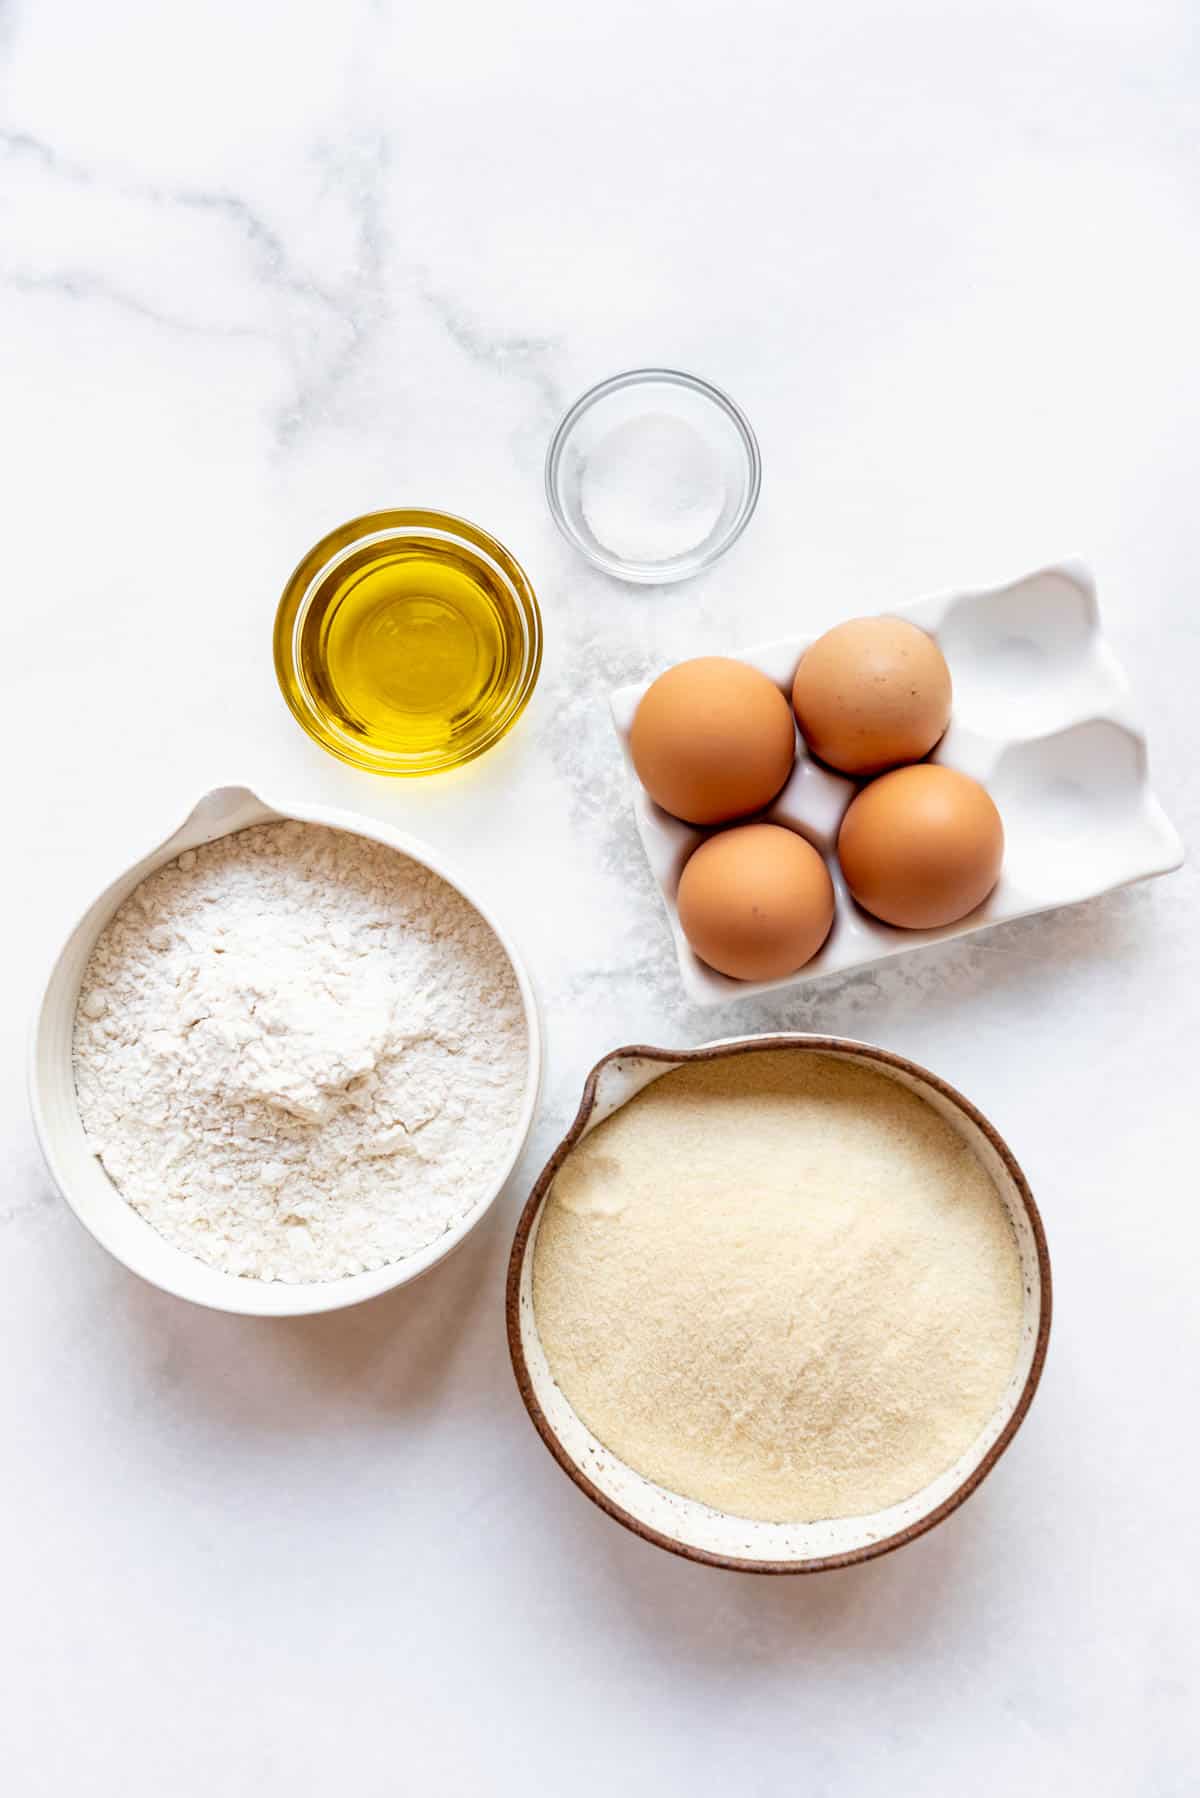 All-purpose flour, semolina flour, four eggs, olive oil, and salt for making homemade pasta.